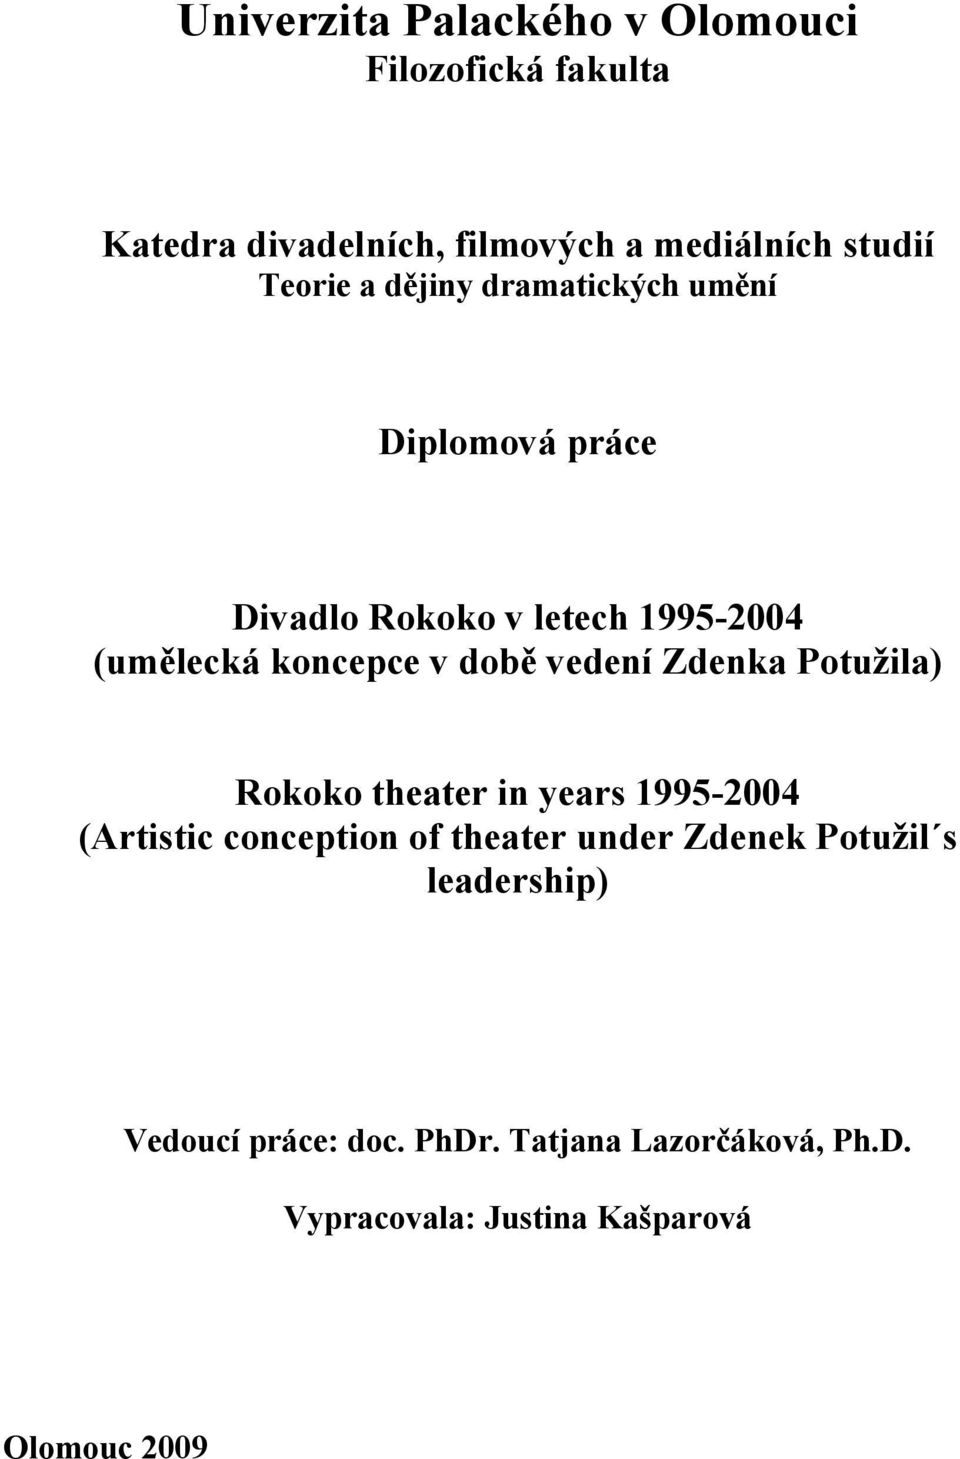 době vedení Zdenka Potužila) Rokoko theater in years 1995-2004 (Artistic conception of theater under Zdenek